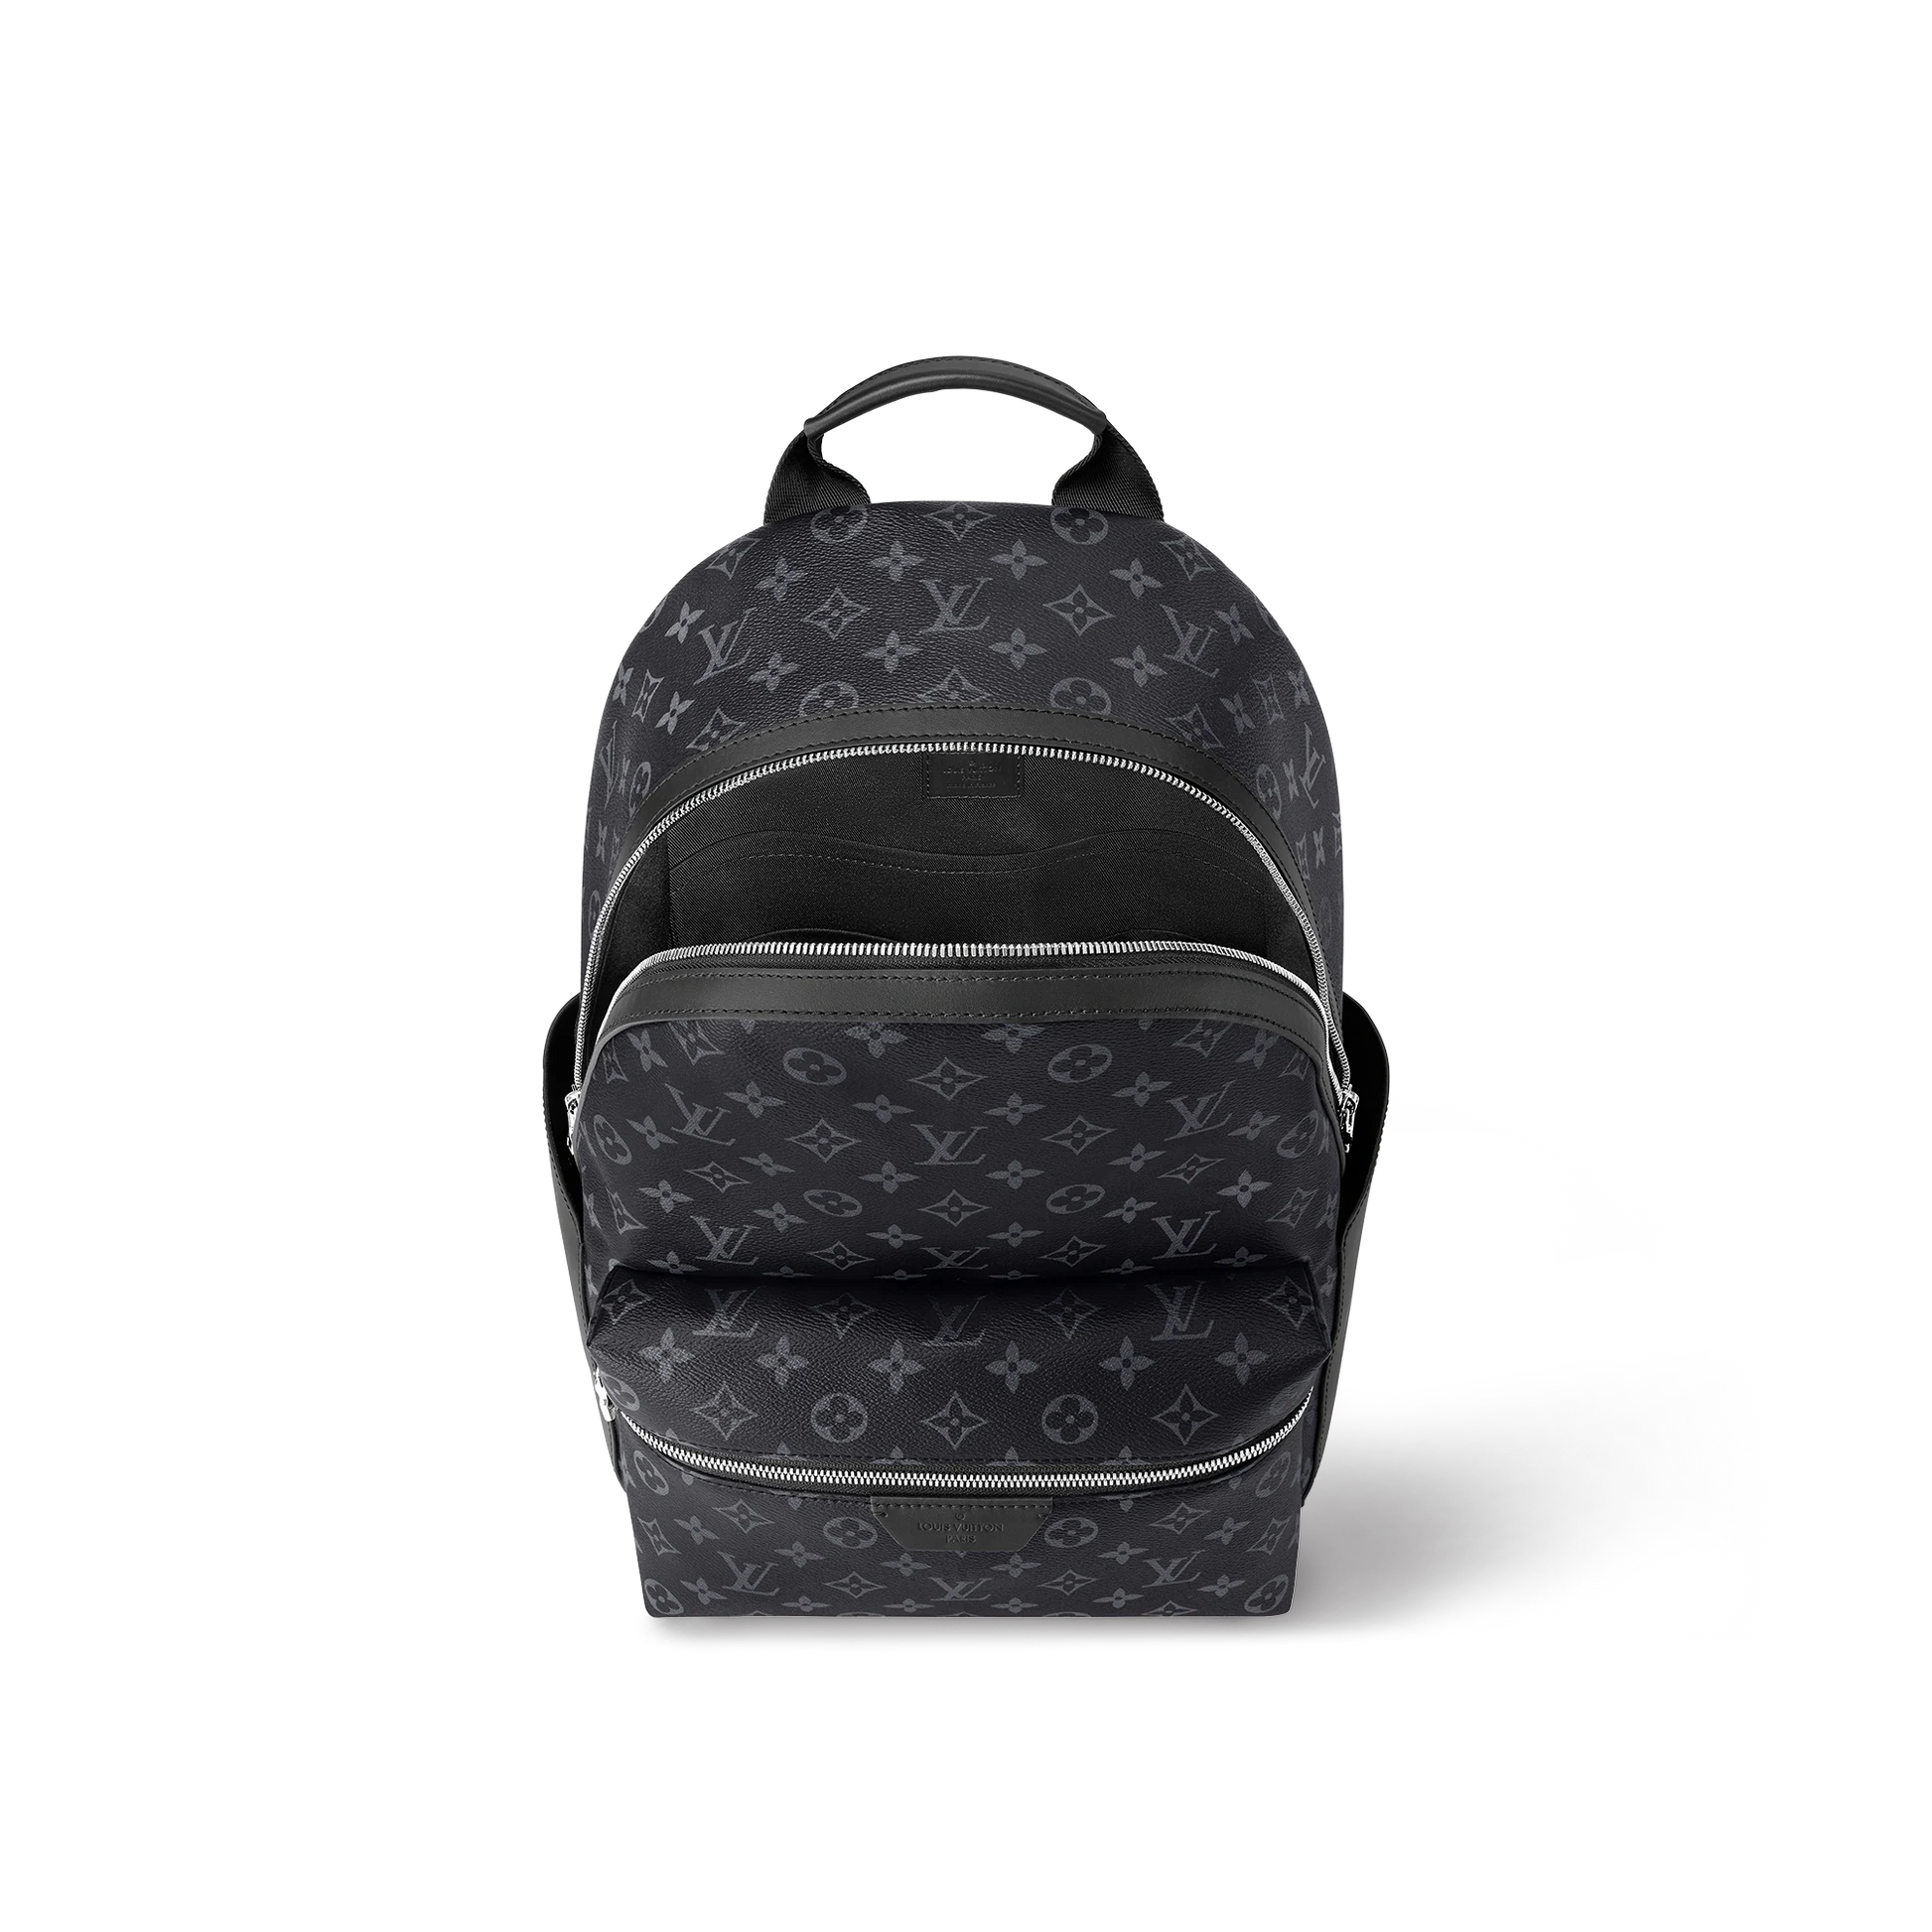 LV Backpack Vendor Link – Resell-Hub